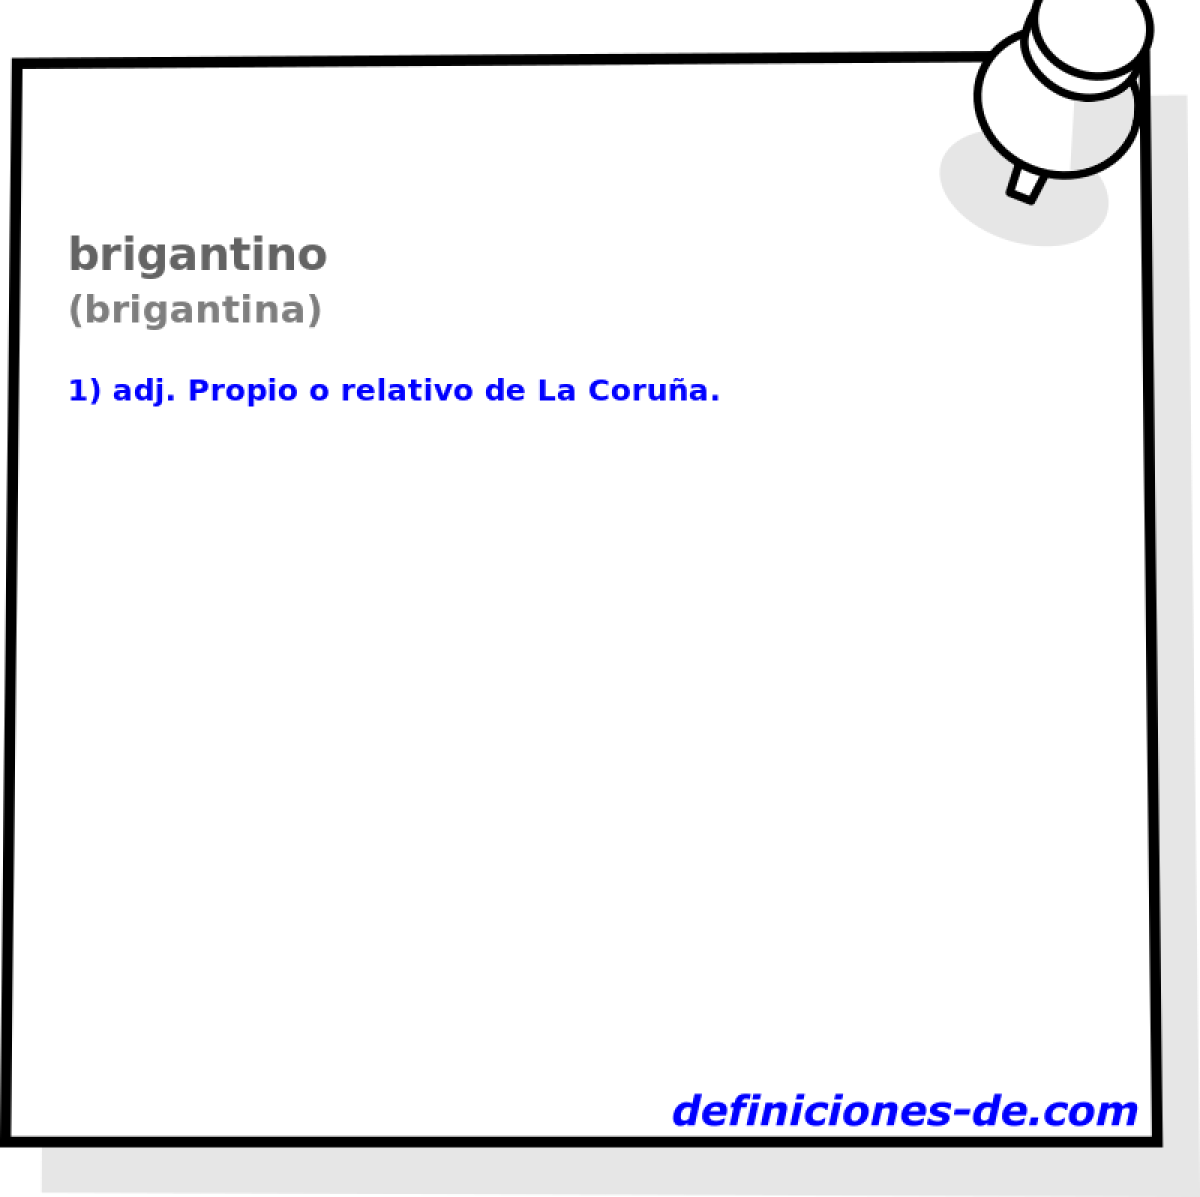 brigantino (brigantina)